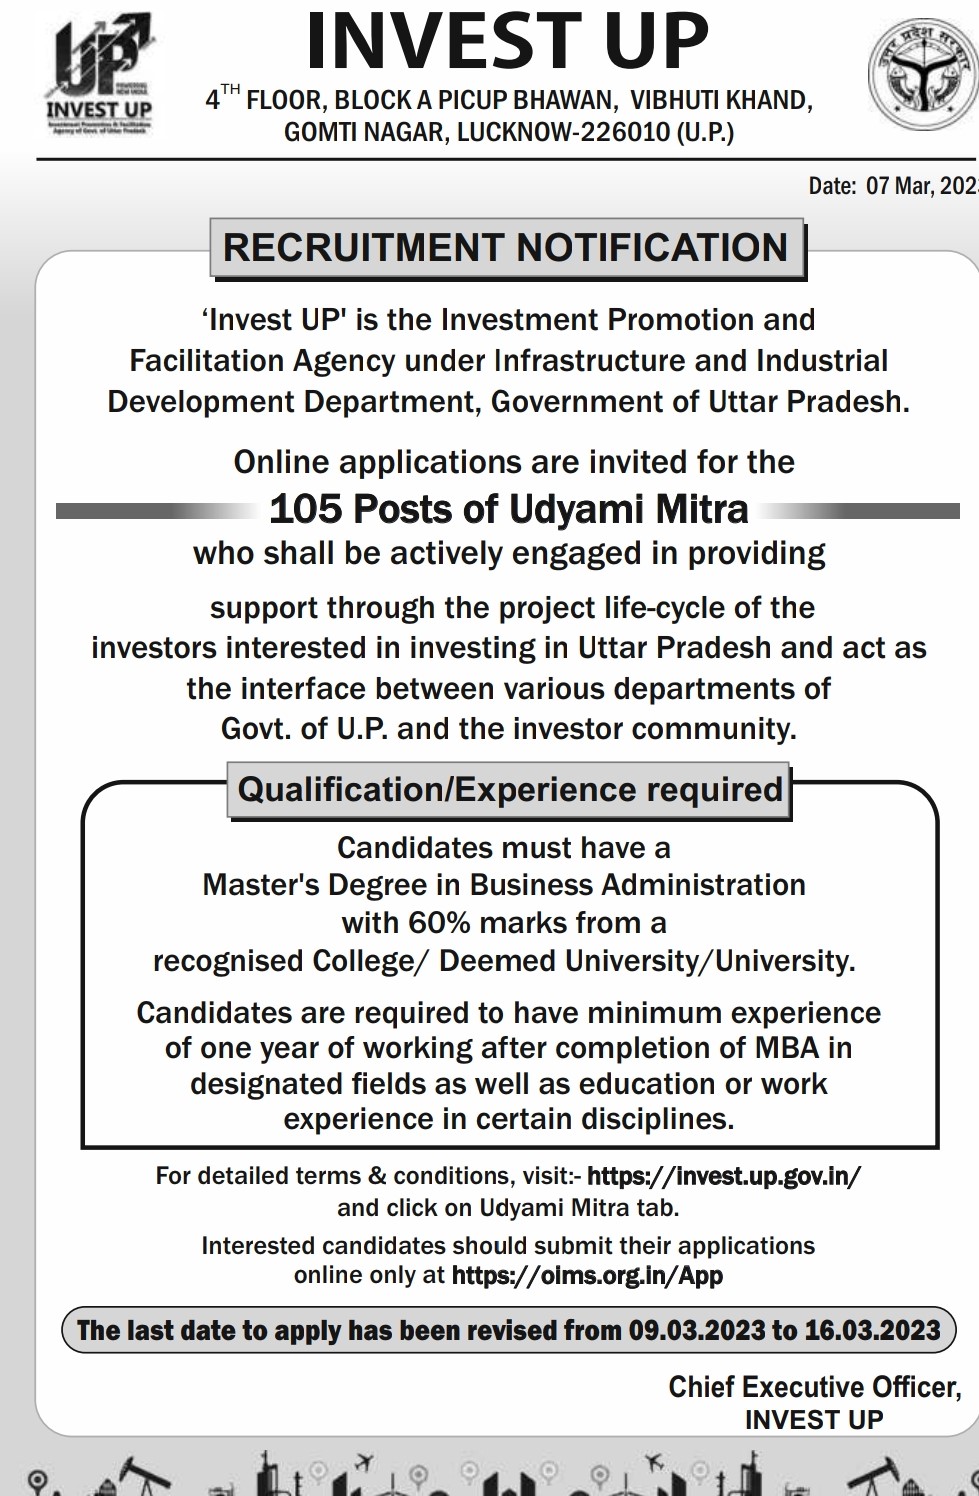 UP Invest Recruitment Udyami Mitra 2023